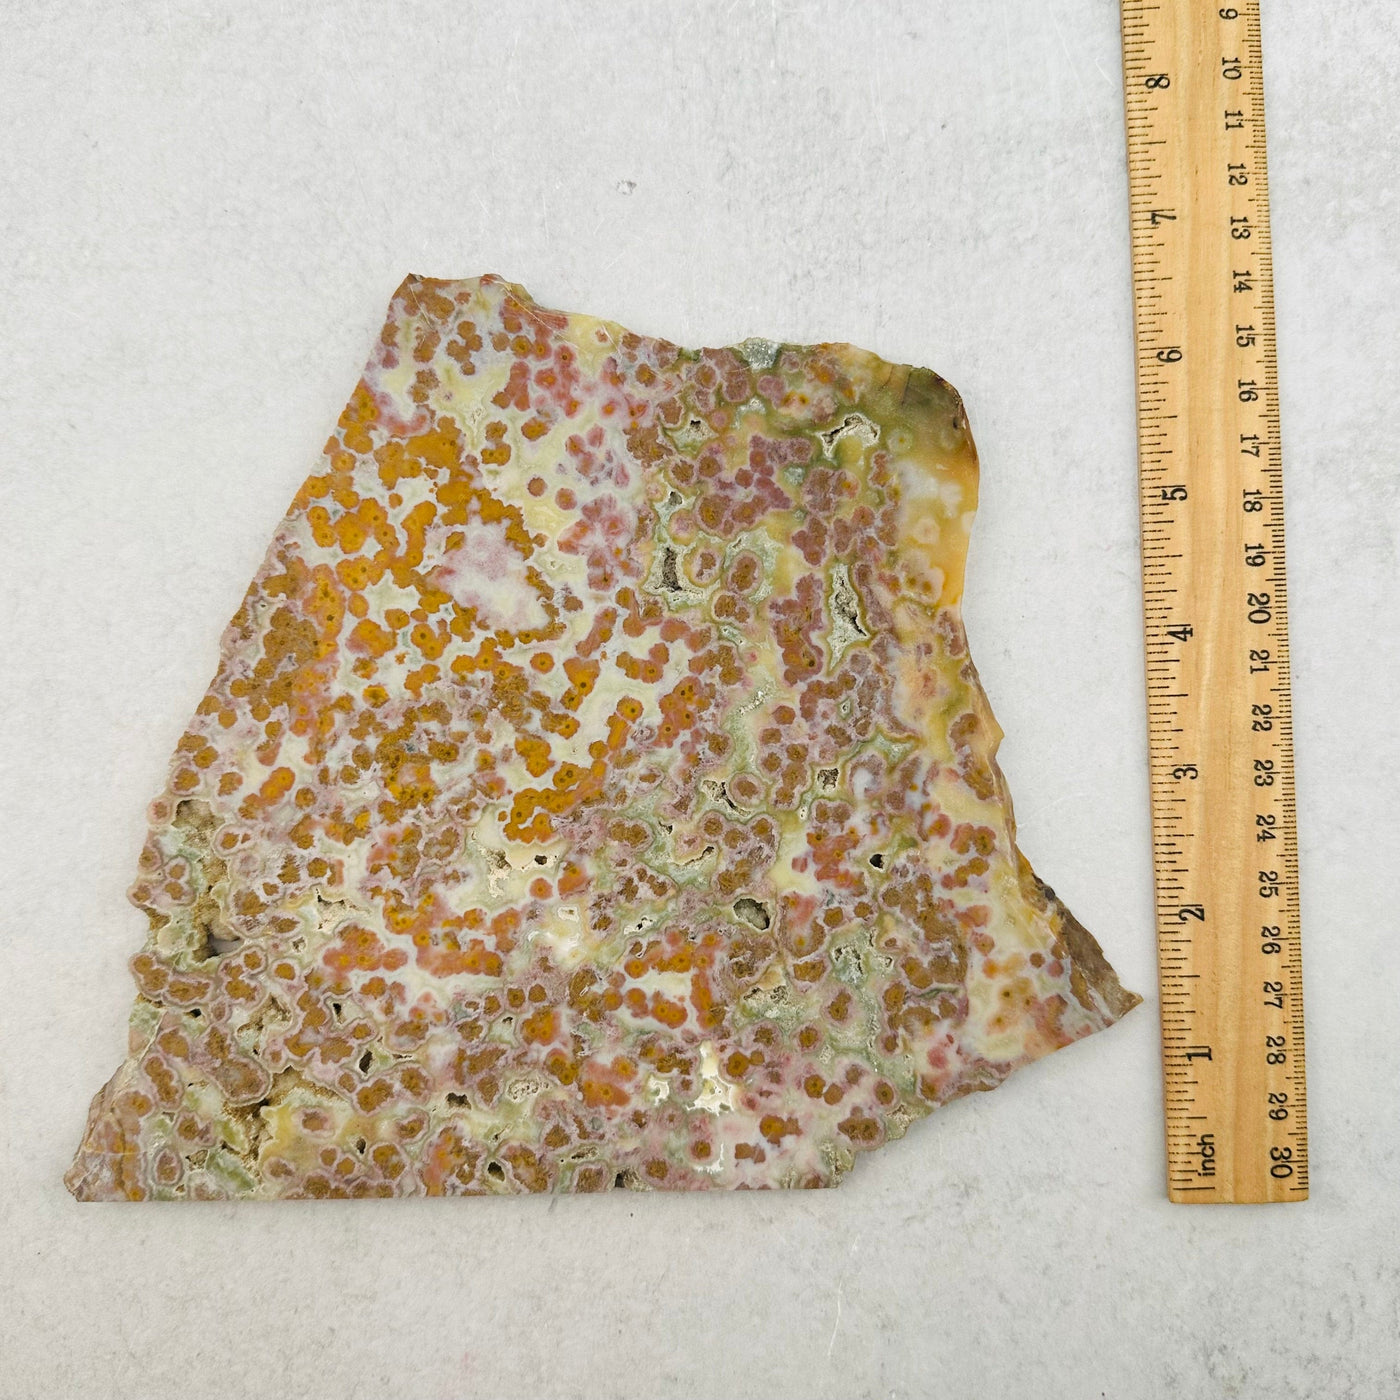 Ocean Jasper Rare Find! 1st Vein Orbicular Ocean Jasper Slab next to a ruler for size reference 